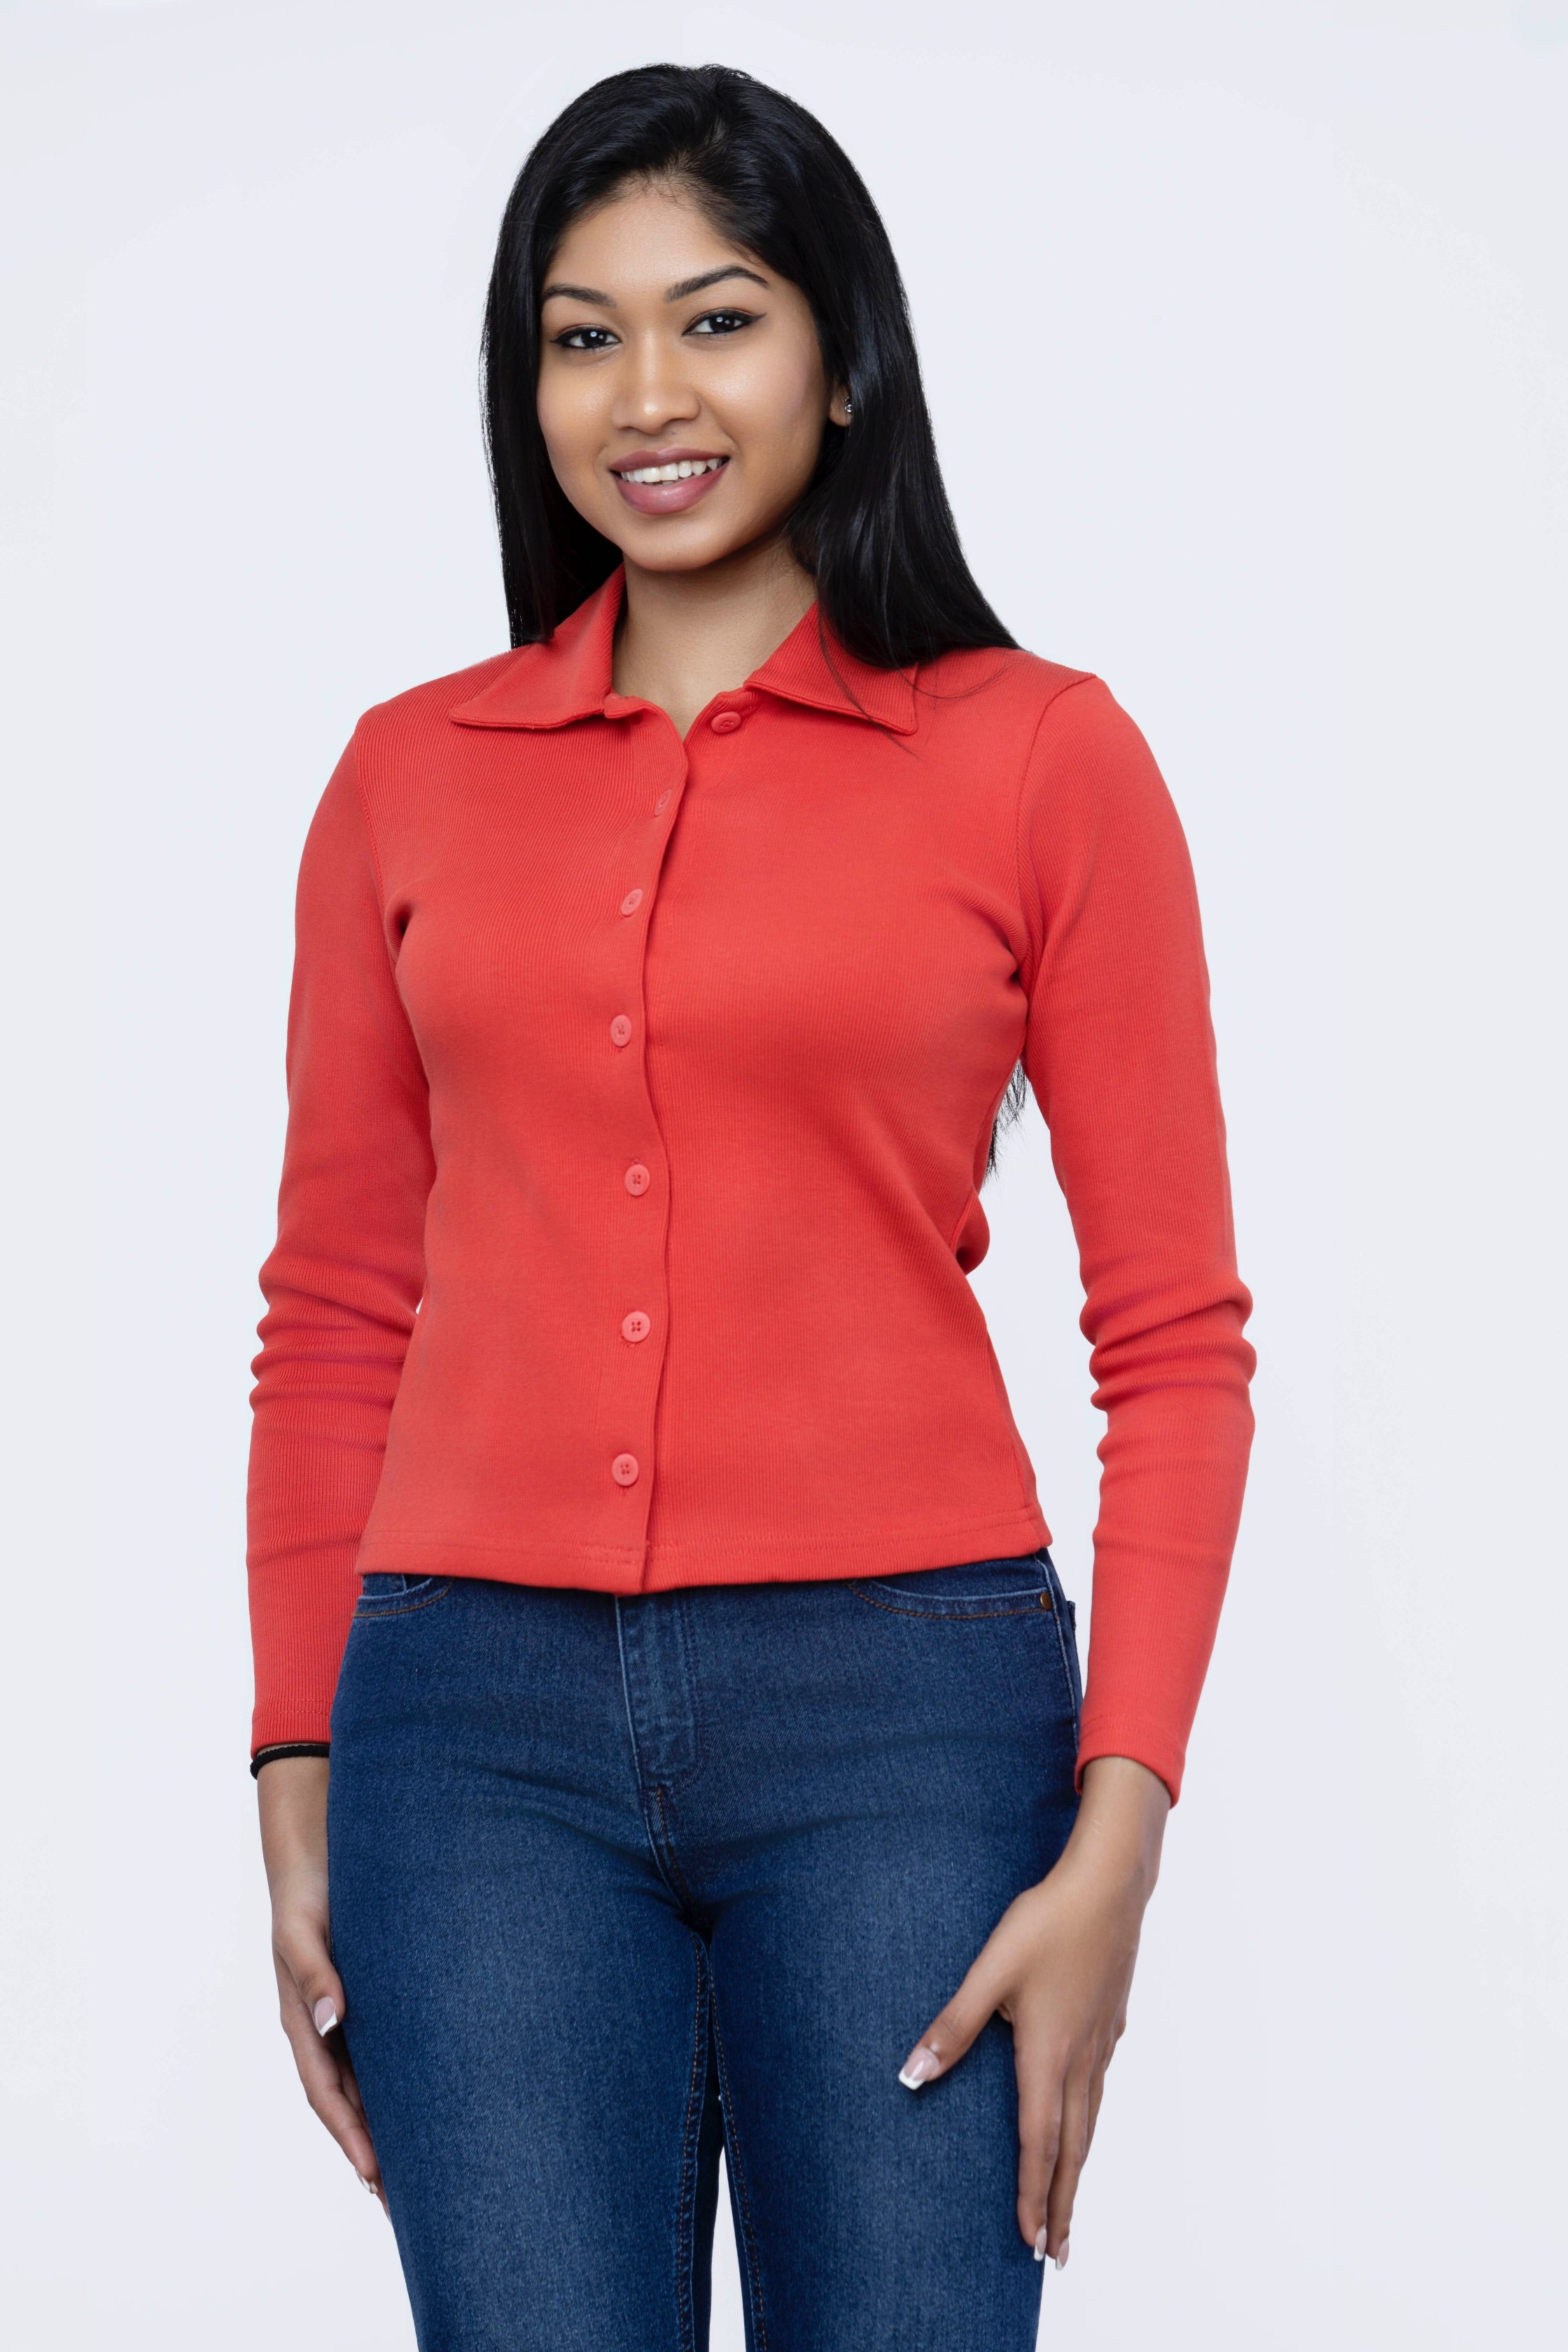 Women's Button Down Shirt - Red